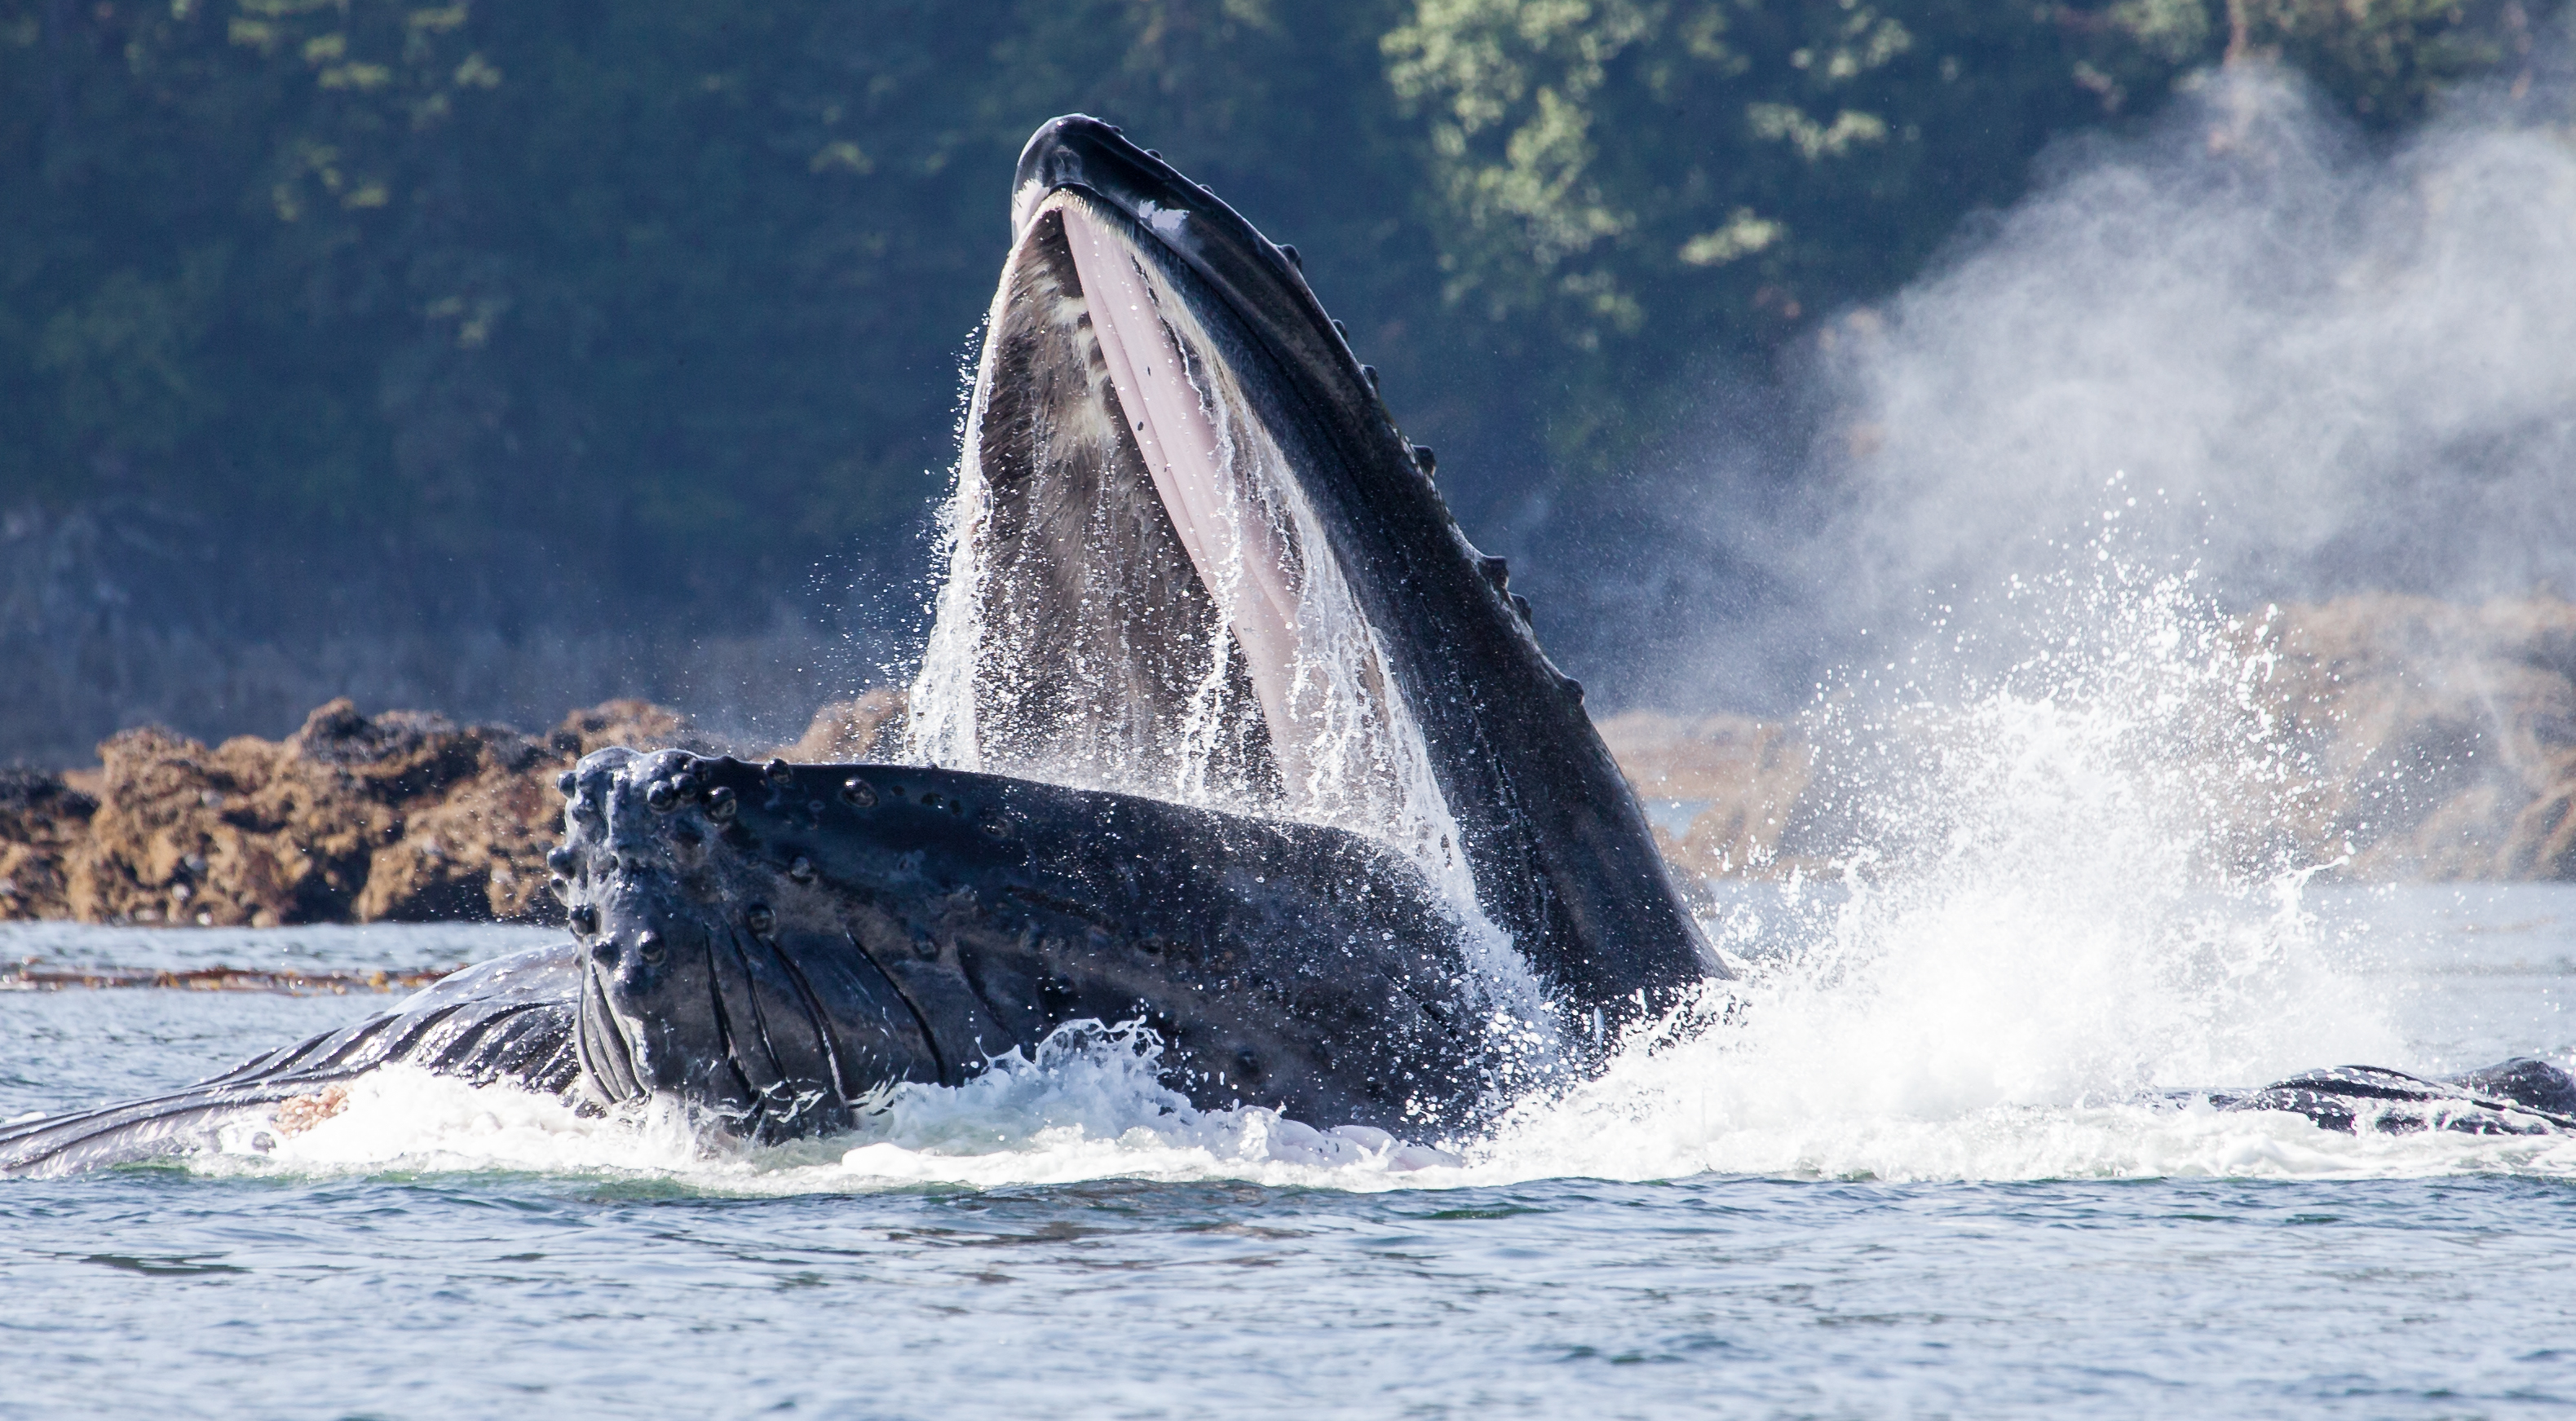 Humpback Whales Bubble Net Feeding